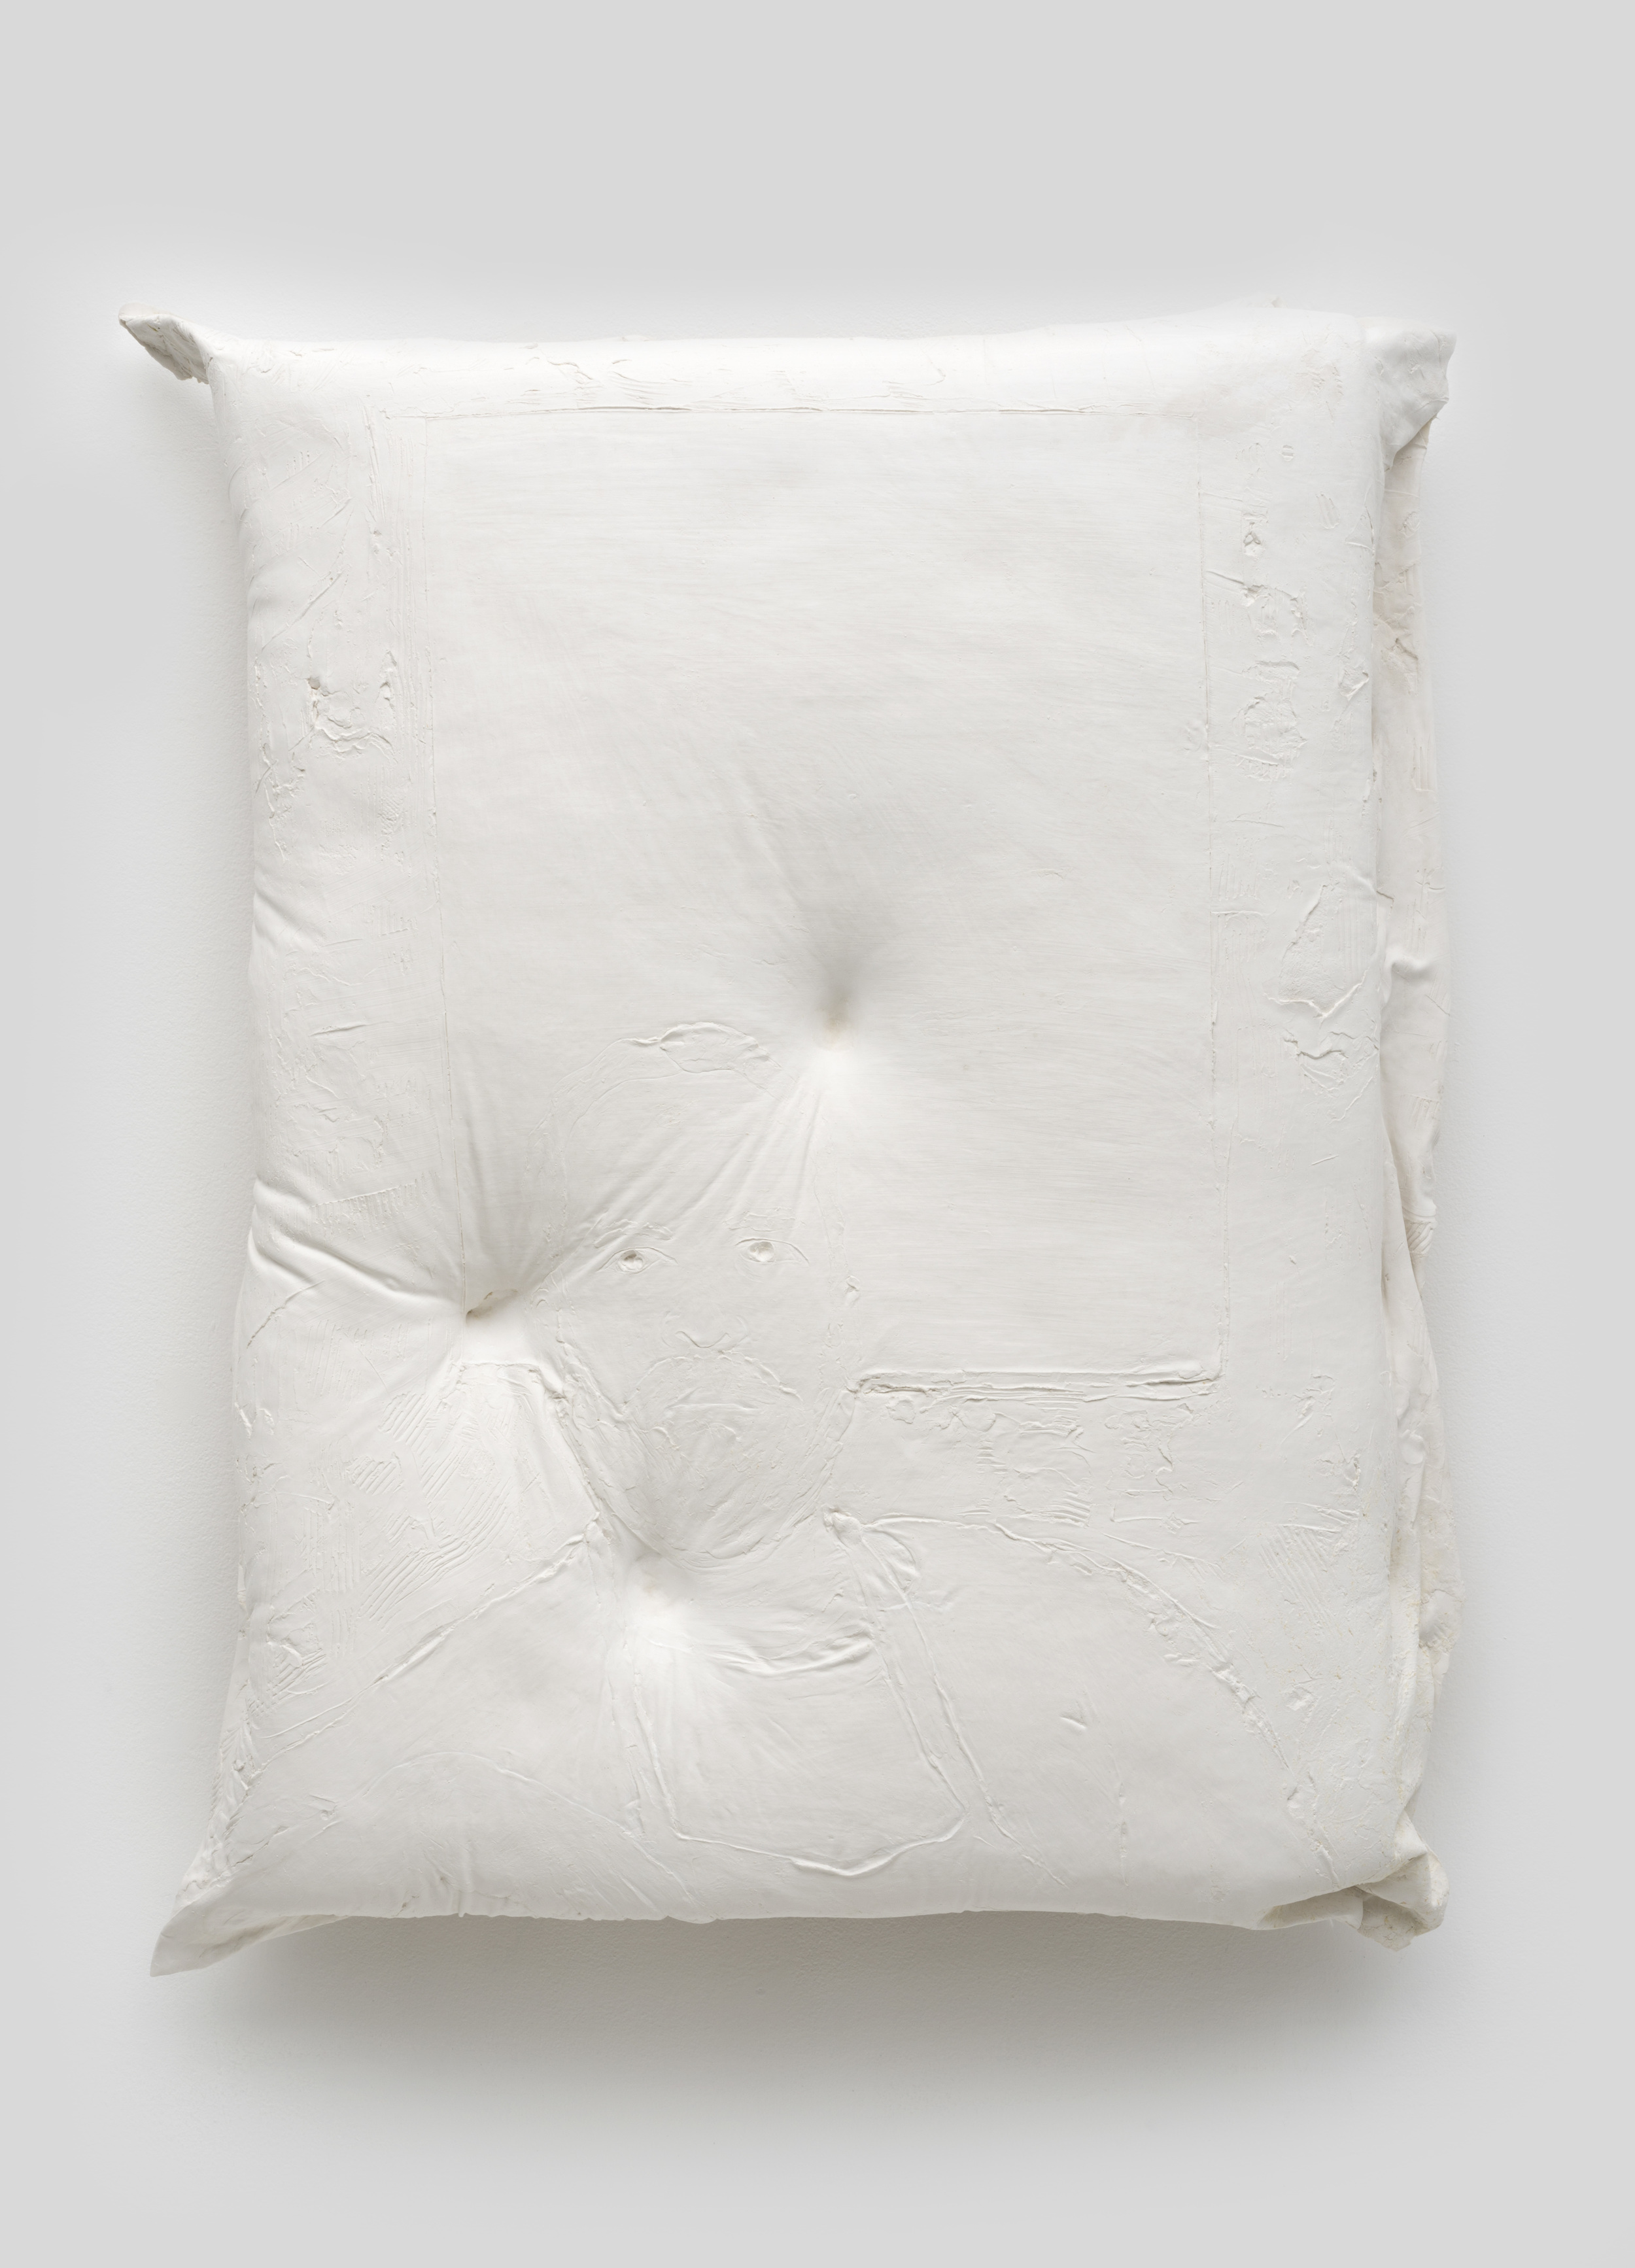   Untitled , 2014 Gypsum cement, fiberglass cloth, wood 34 x 30 x 8 inches 